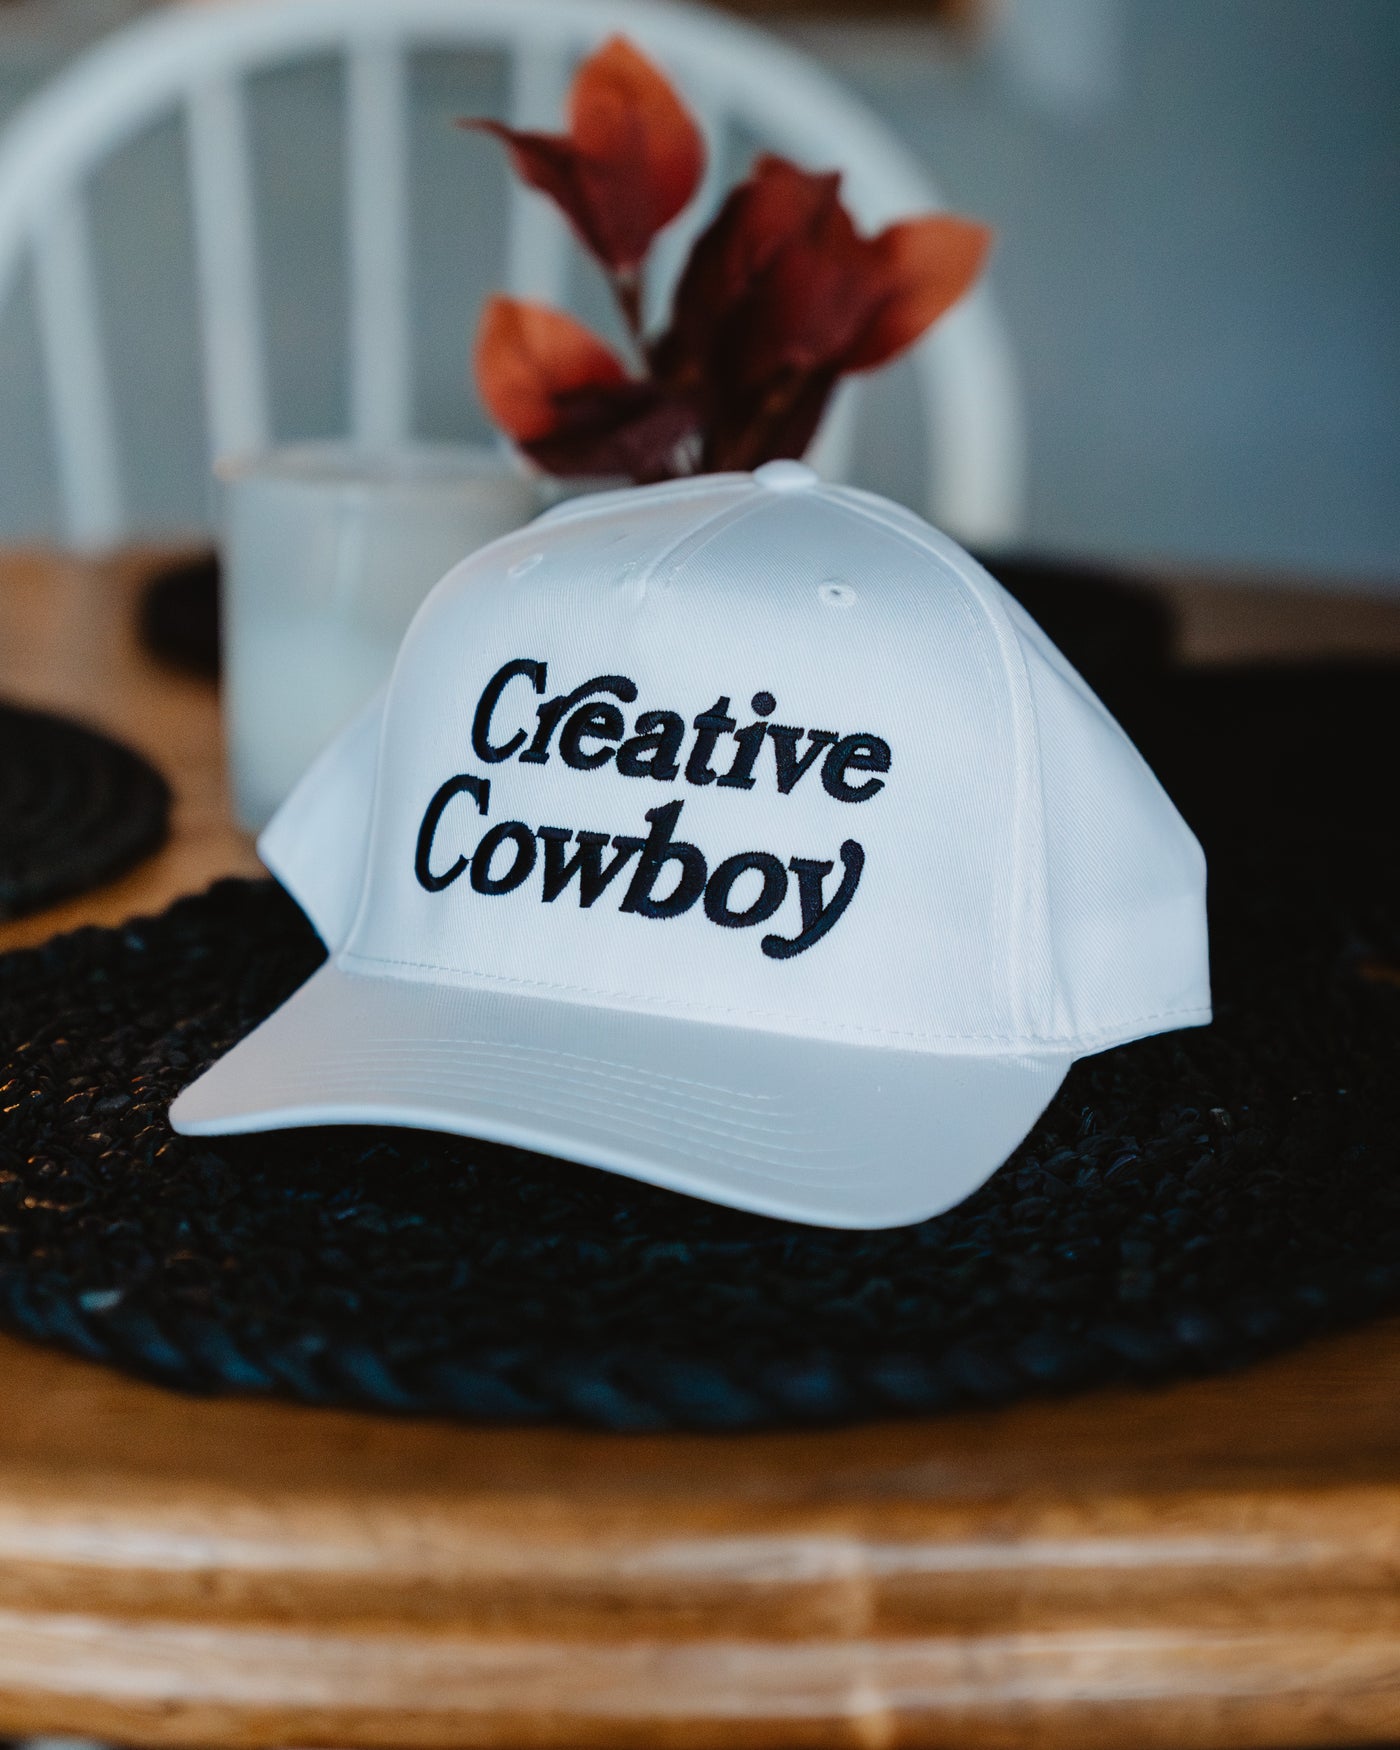 Creative Cowboy Cap